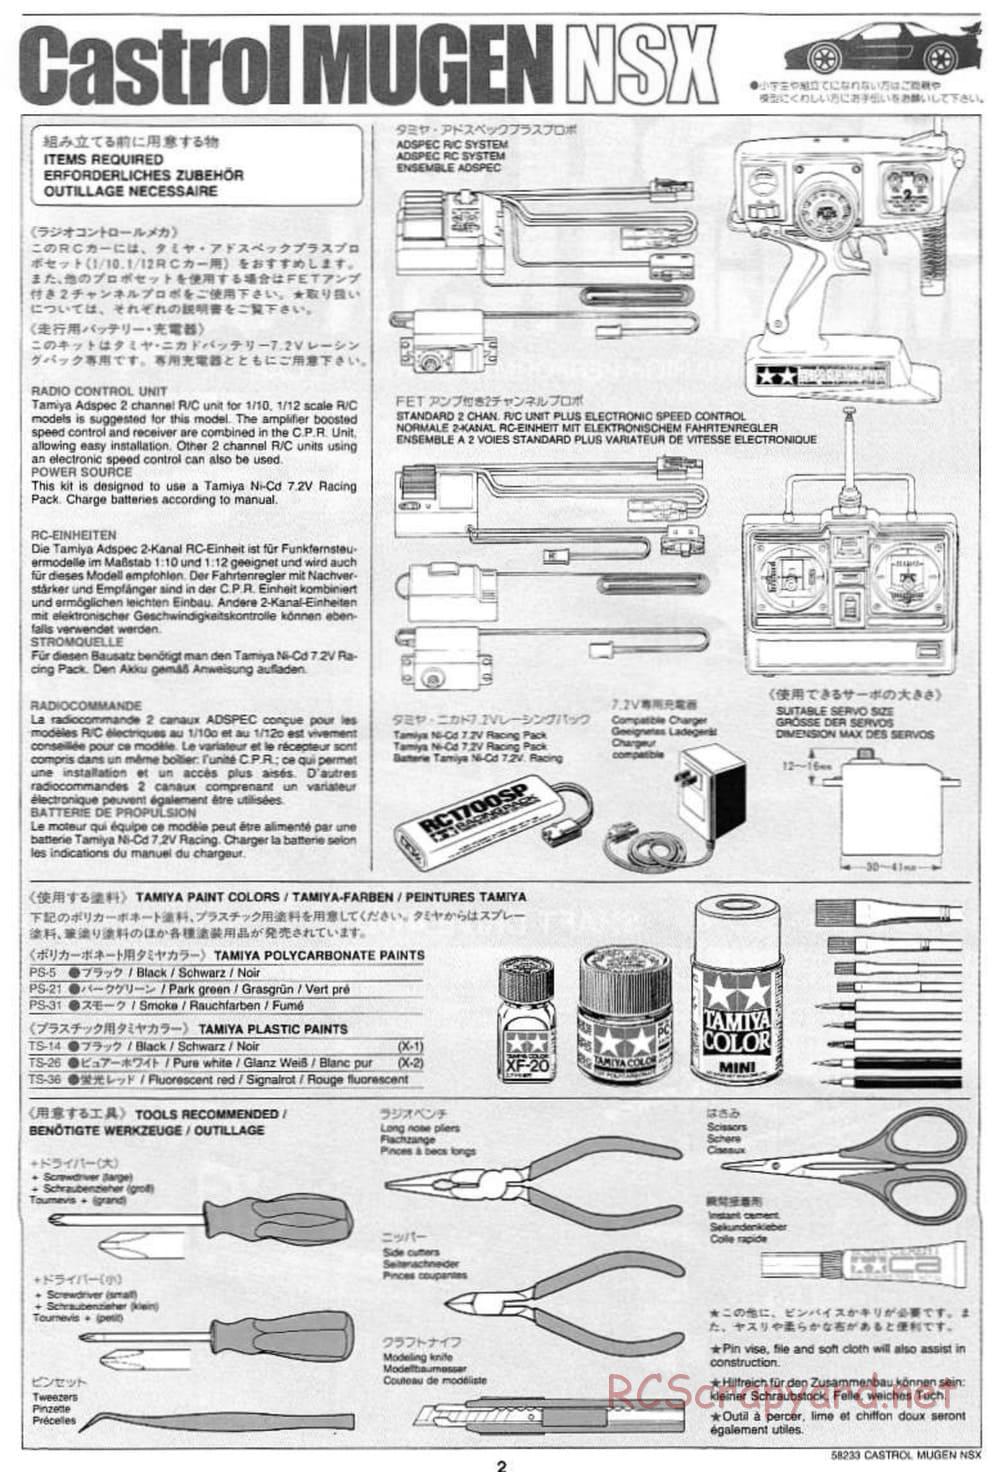 Tamiya - Castrol Mugen NSX - TL-01 Chassis - Manual - Page 2